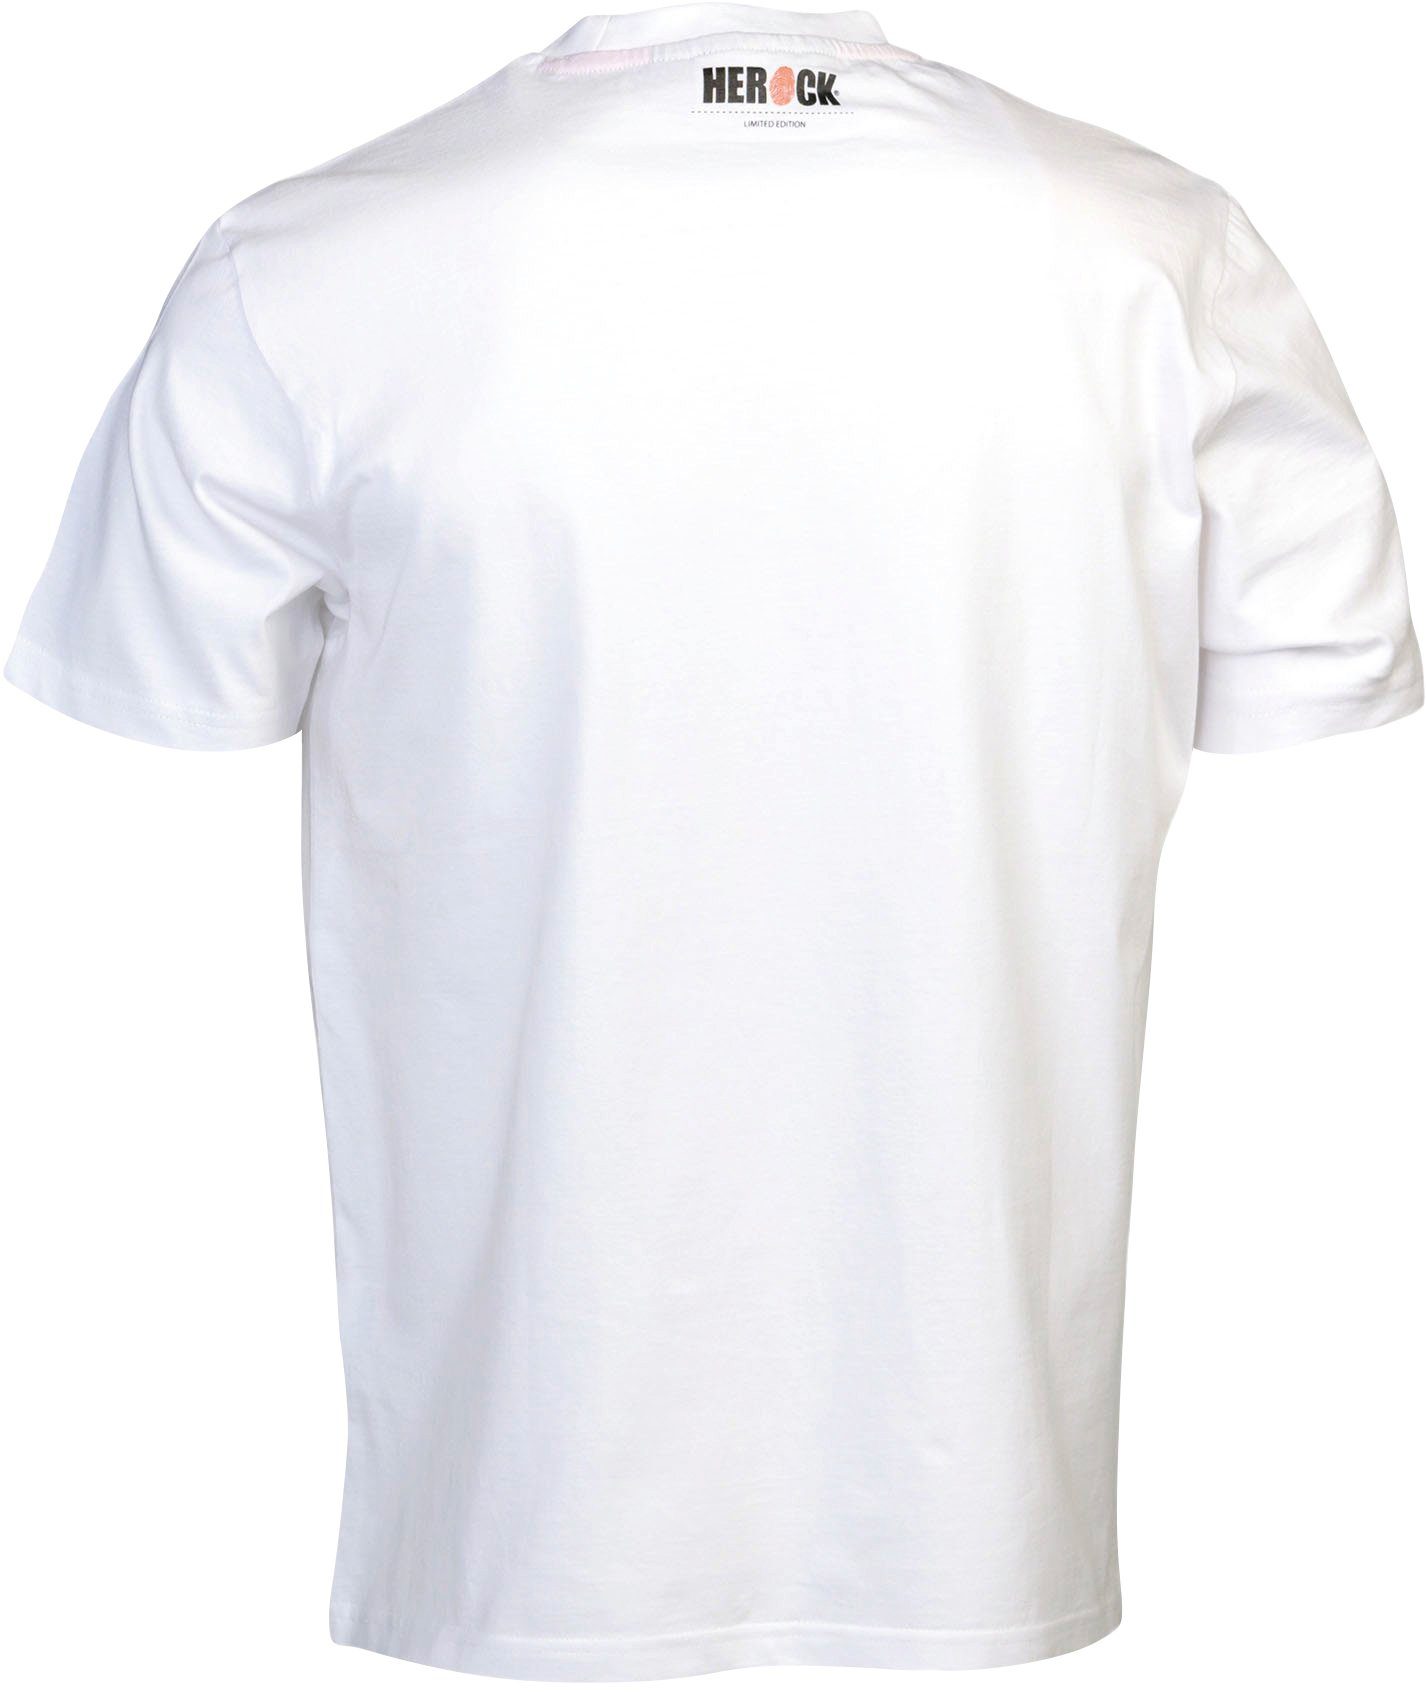 Herock®-Aufdruck kurzen Ärmeln, T-Shirt Rundhalsausschnitt, Burst Mit Herock